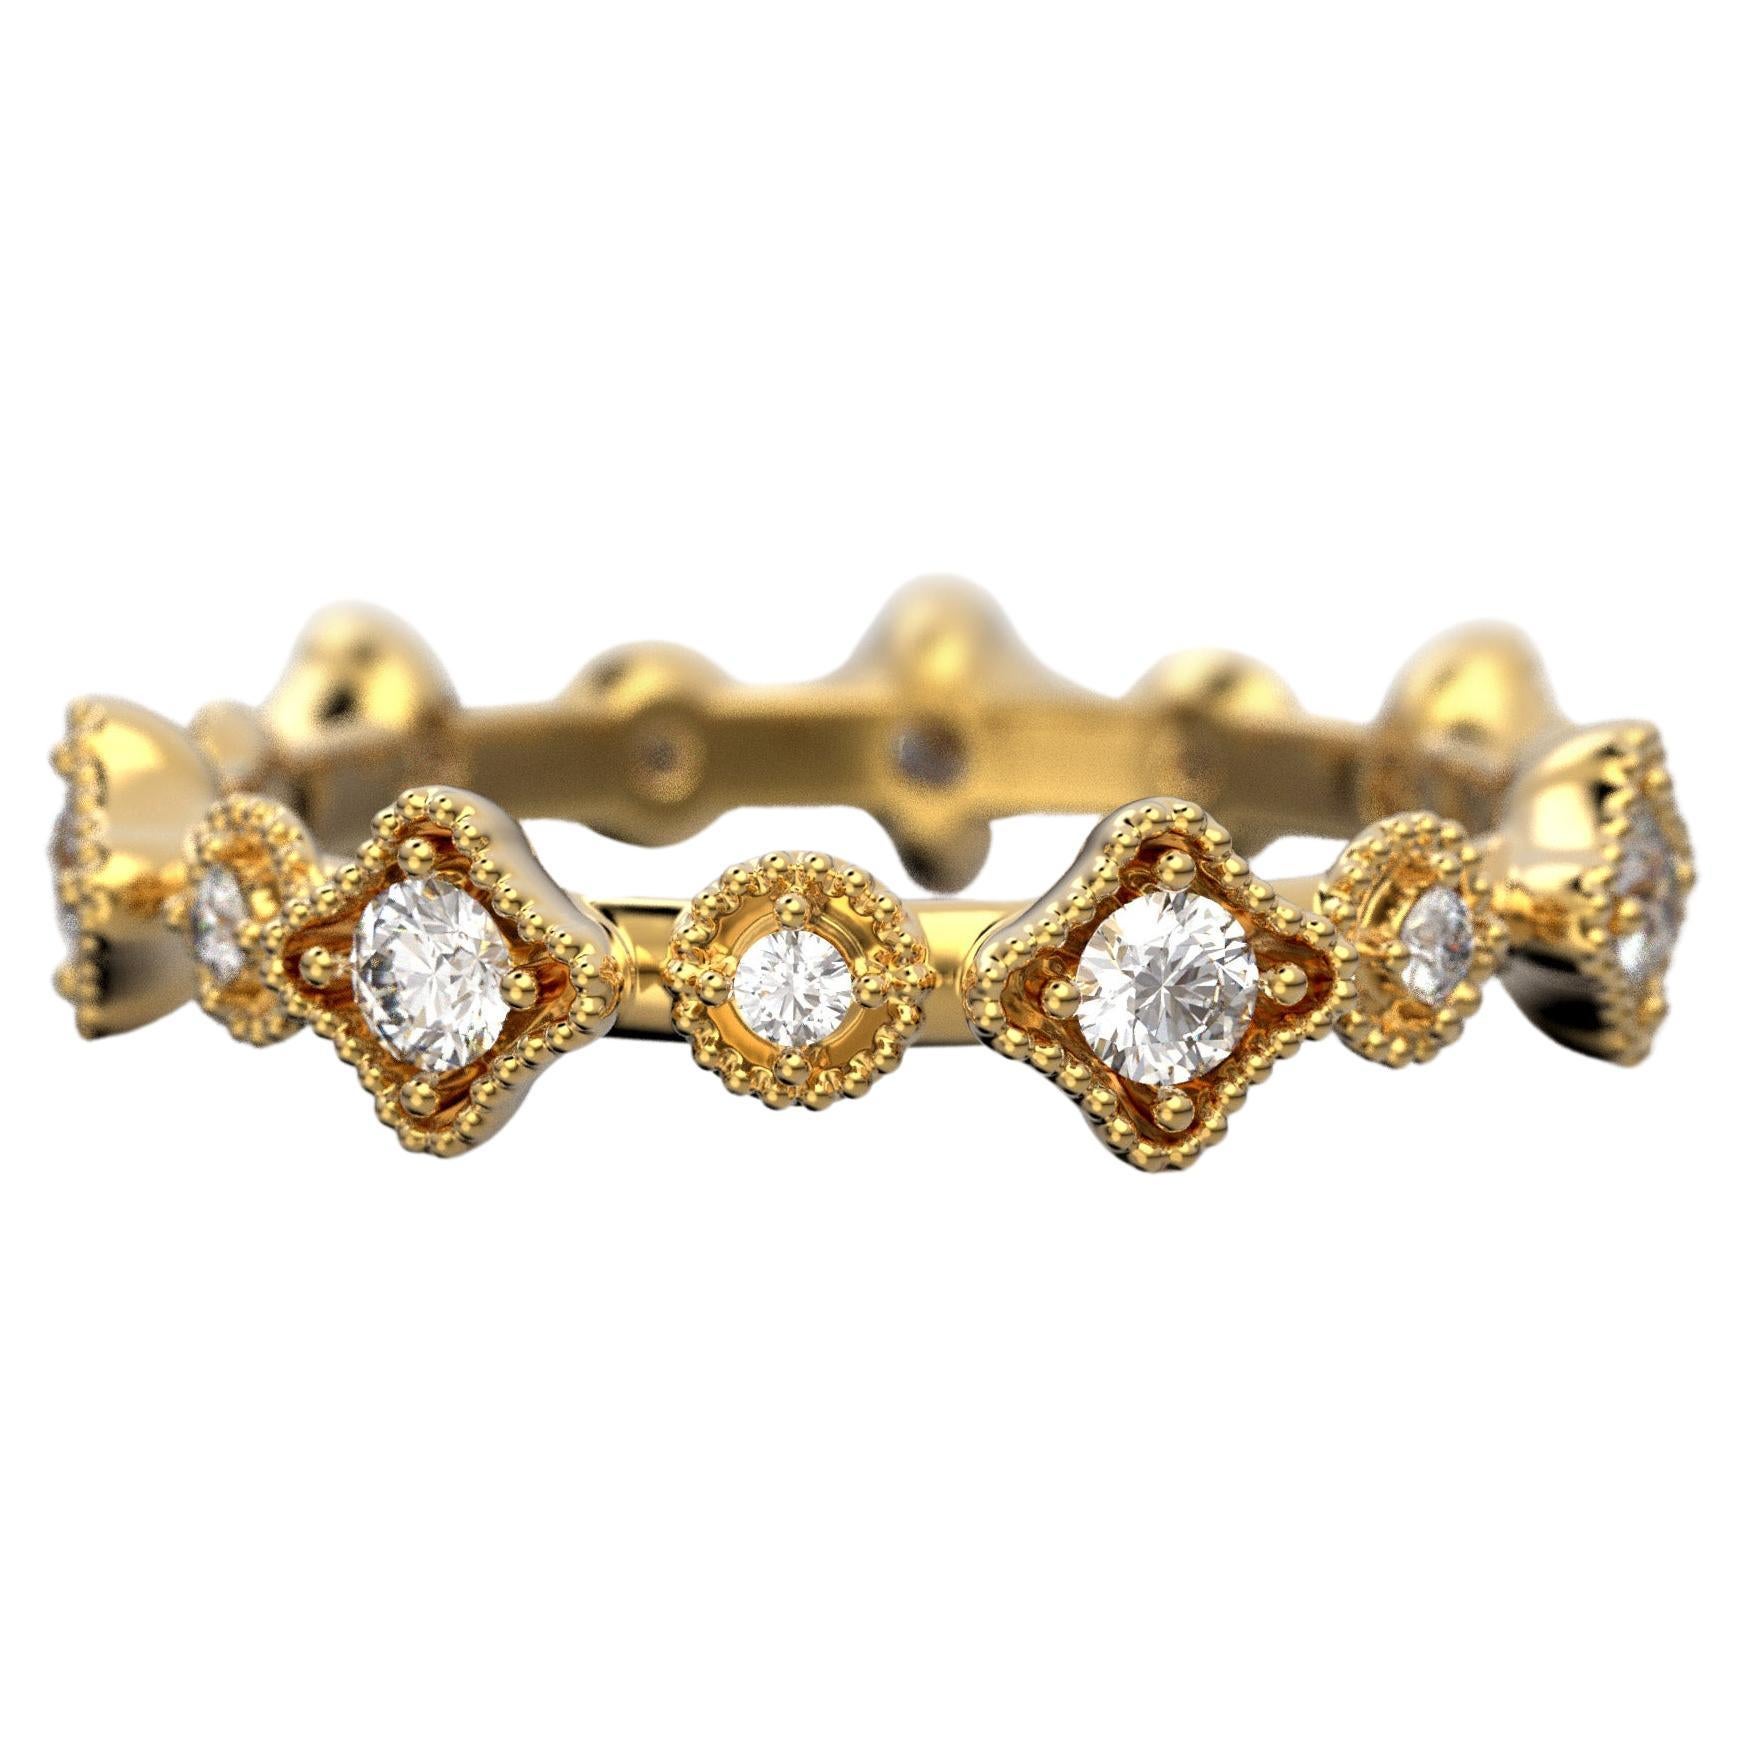 For Sale:  Eternity Wedding Diamond Band, Italian Solid Gold 14k, 0.5 Carats of Diamonds